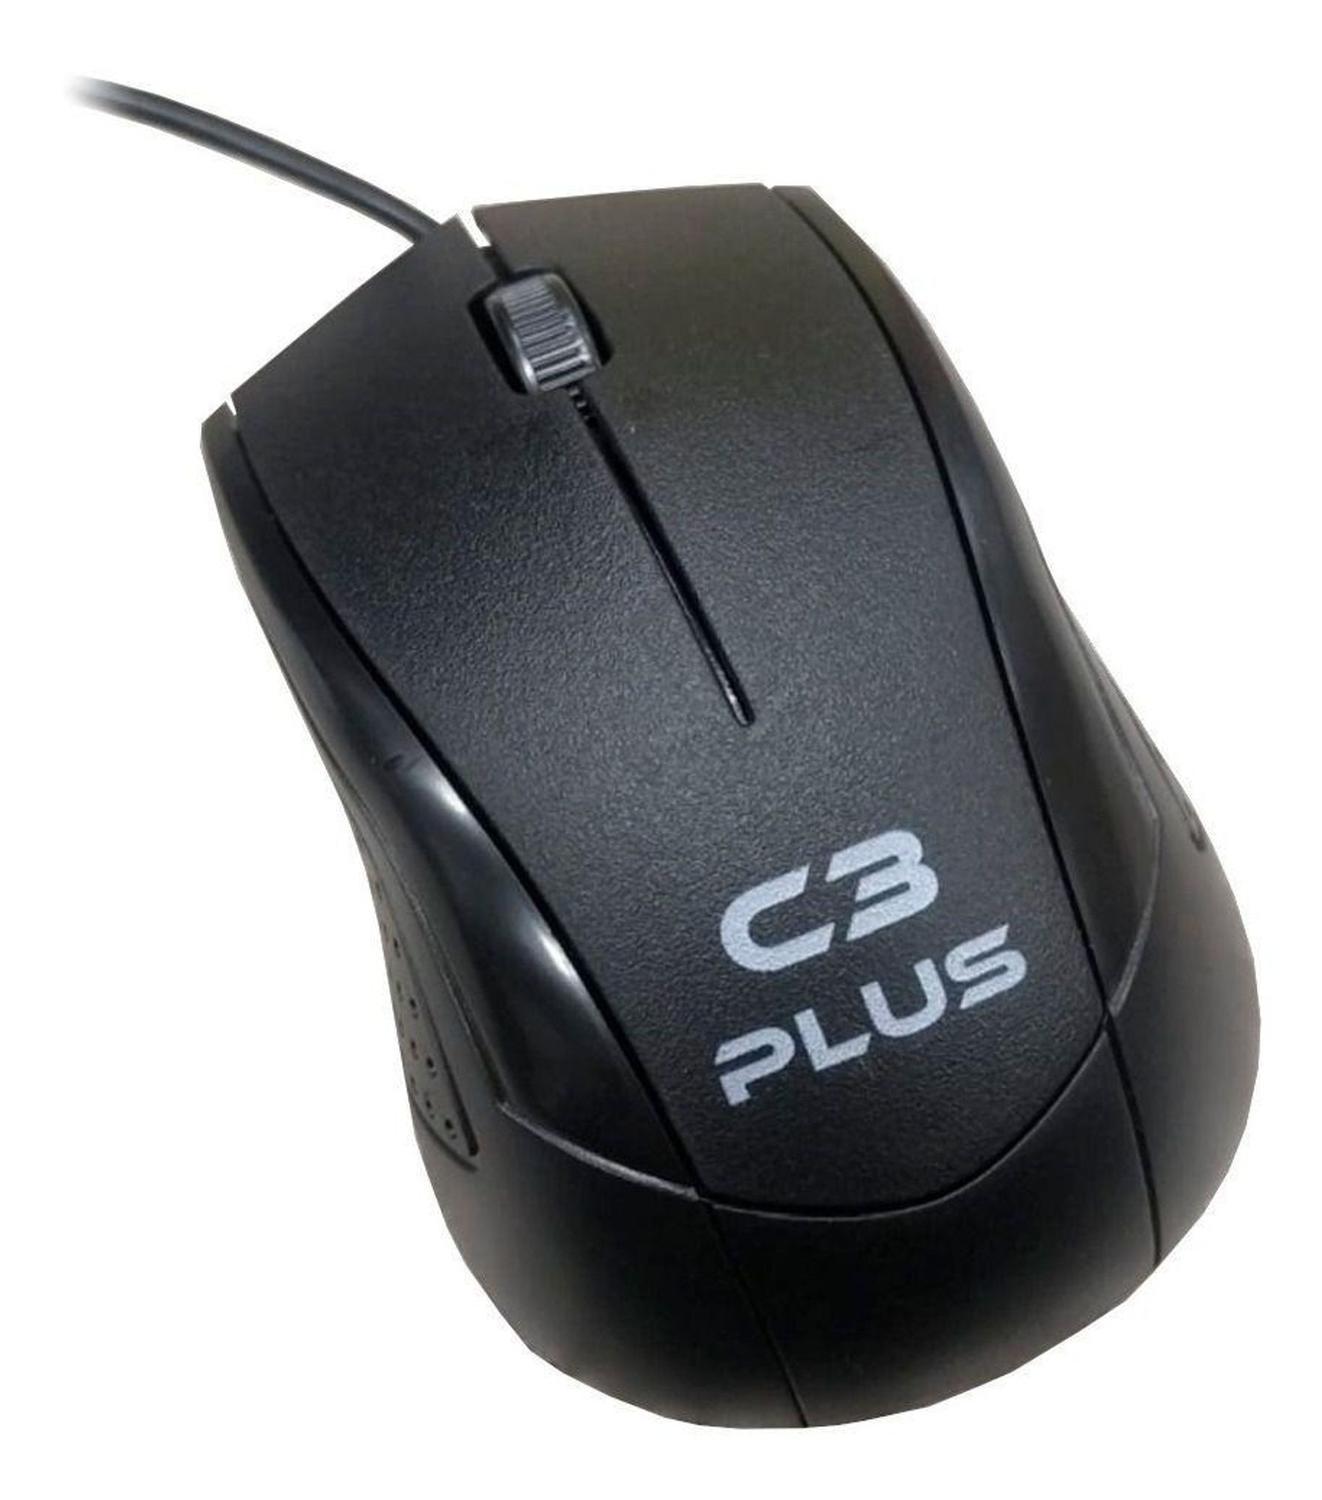 Mouse usb c3 plus 1000dpi ms-27bk preto